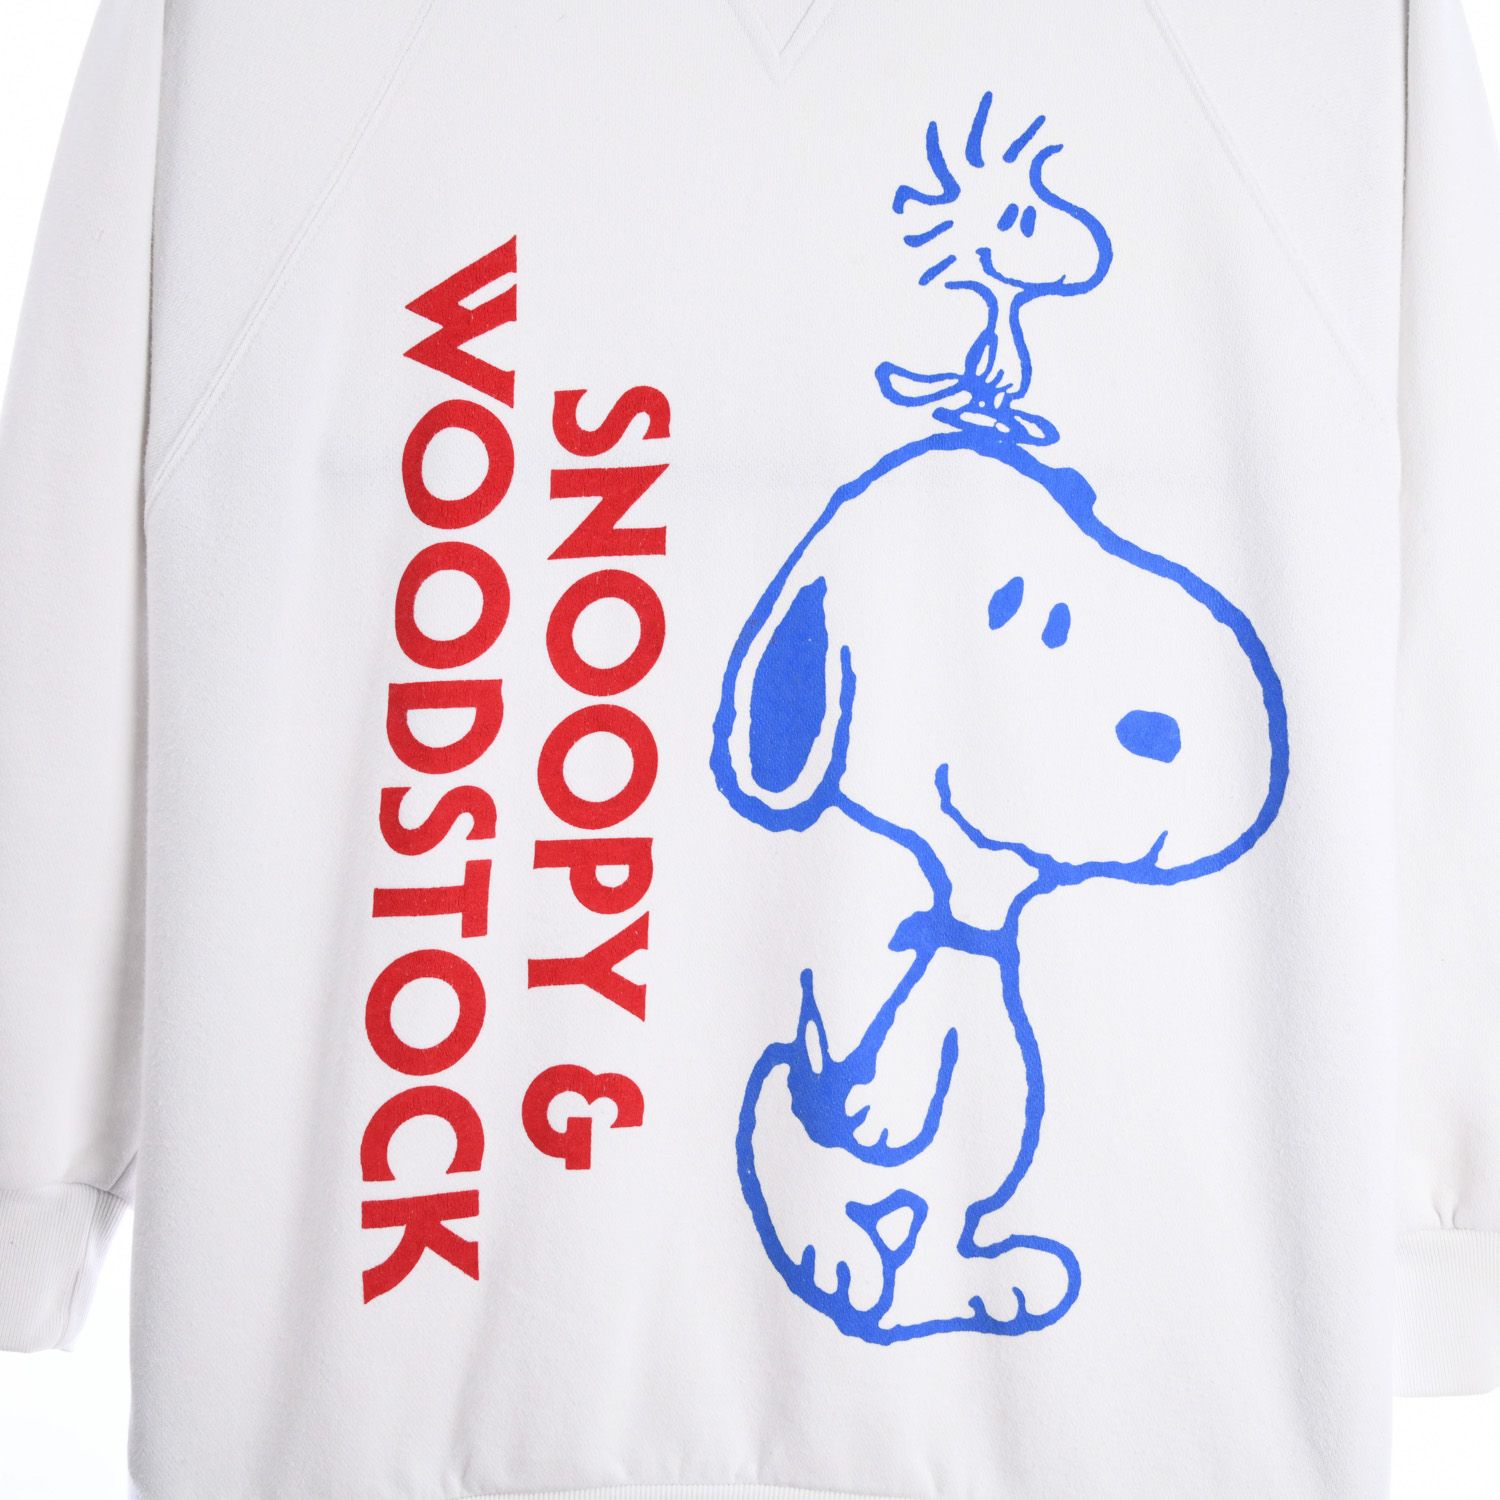 Snoopy & Woodstock 1980s Sweatshirt